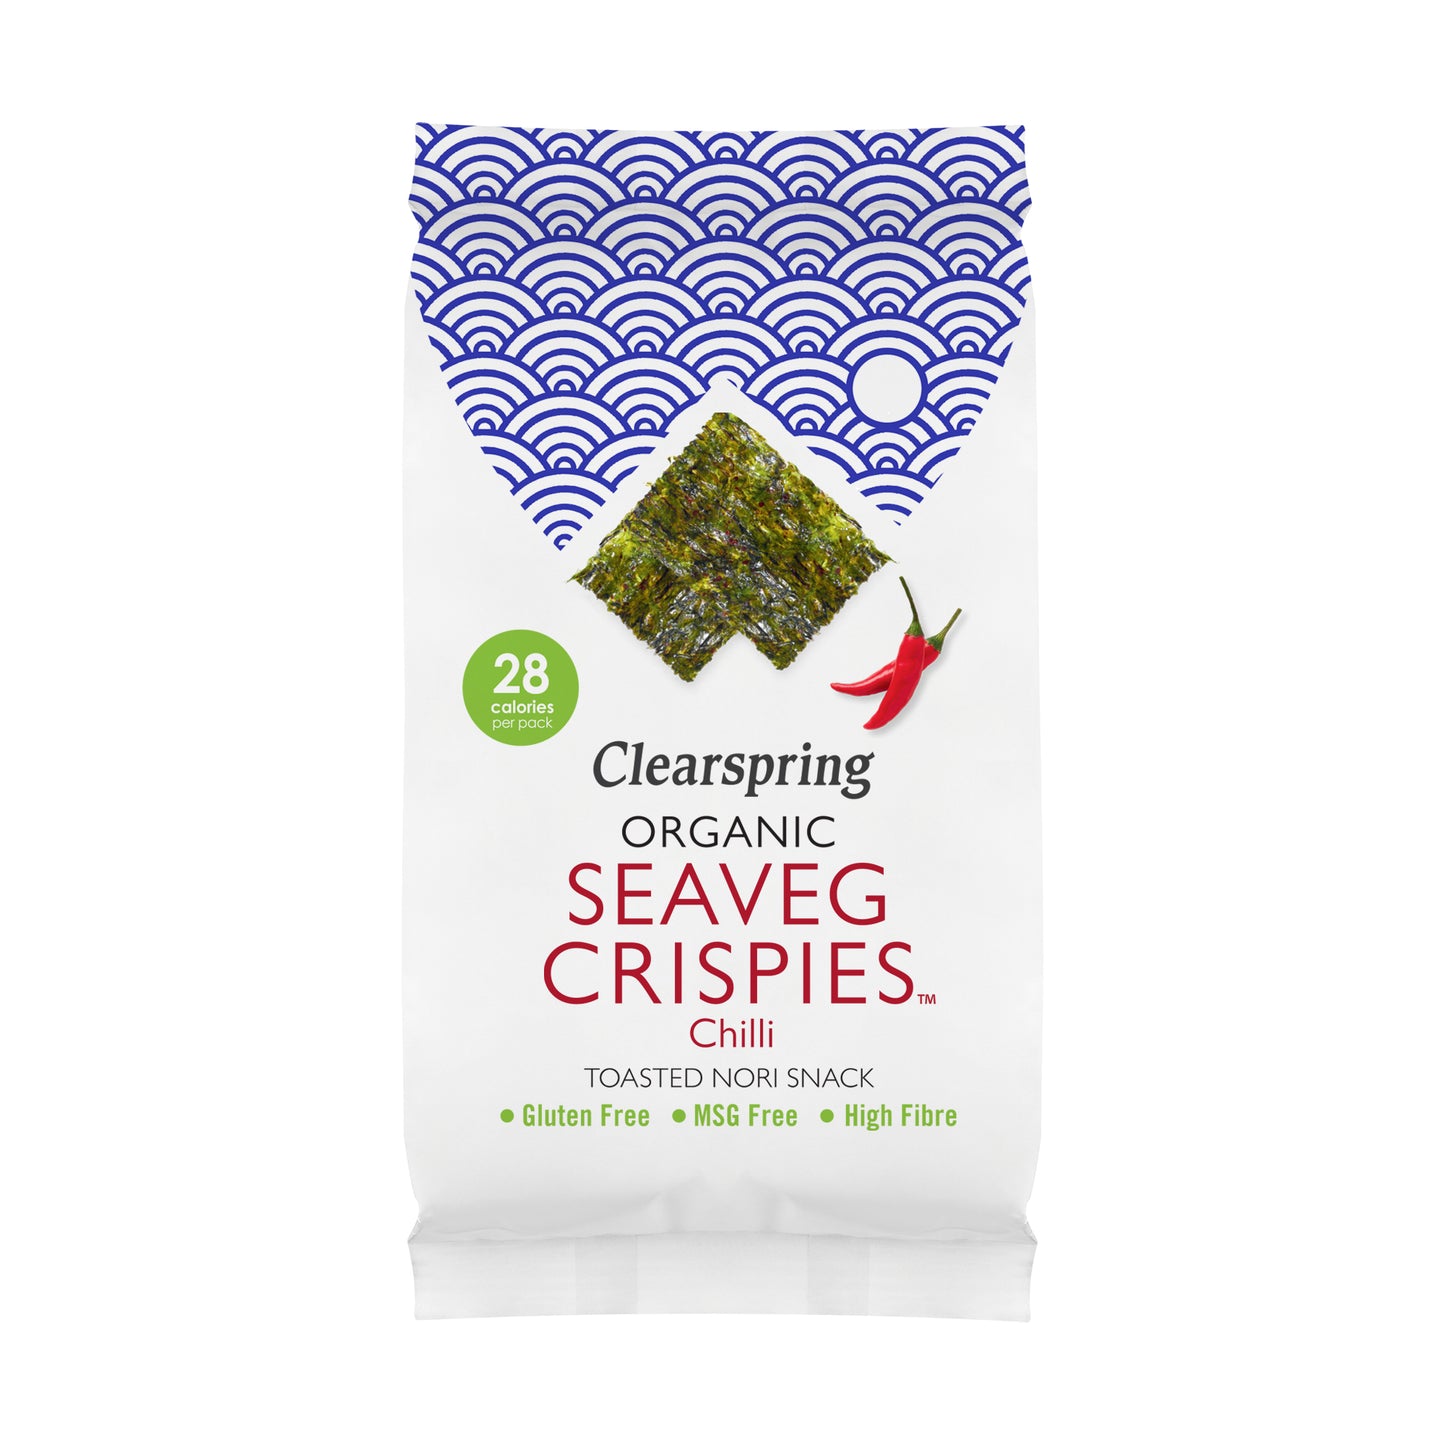 Organic Seaveg Crispies - Chilli (Crispy Seaweed Thins)